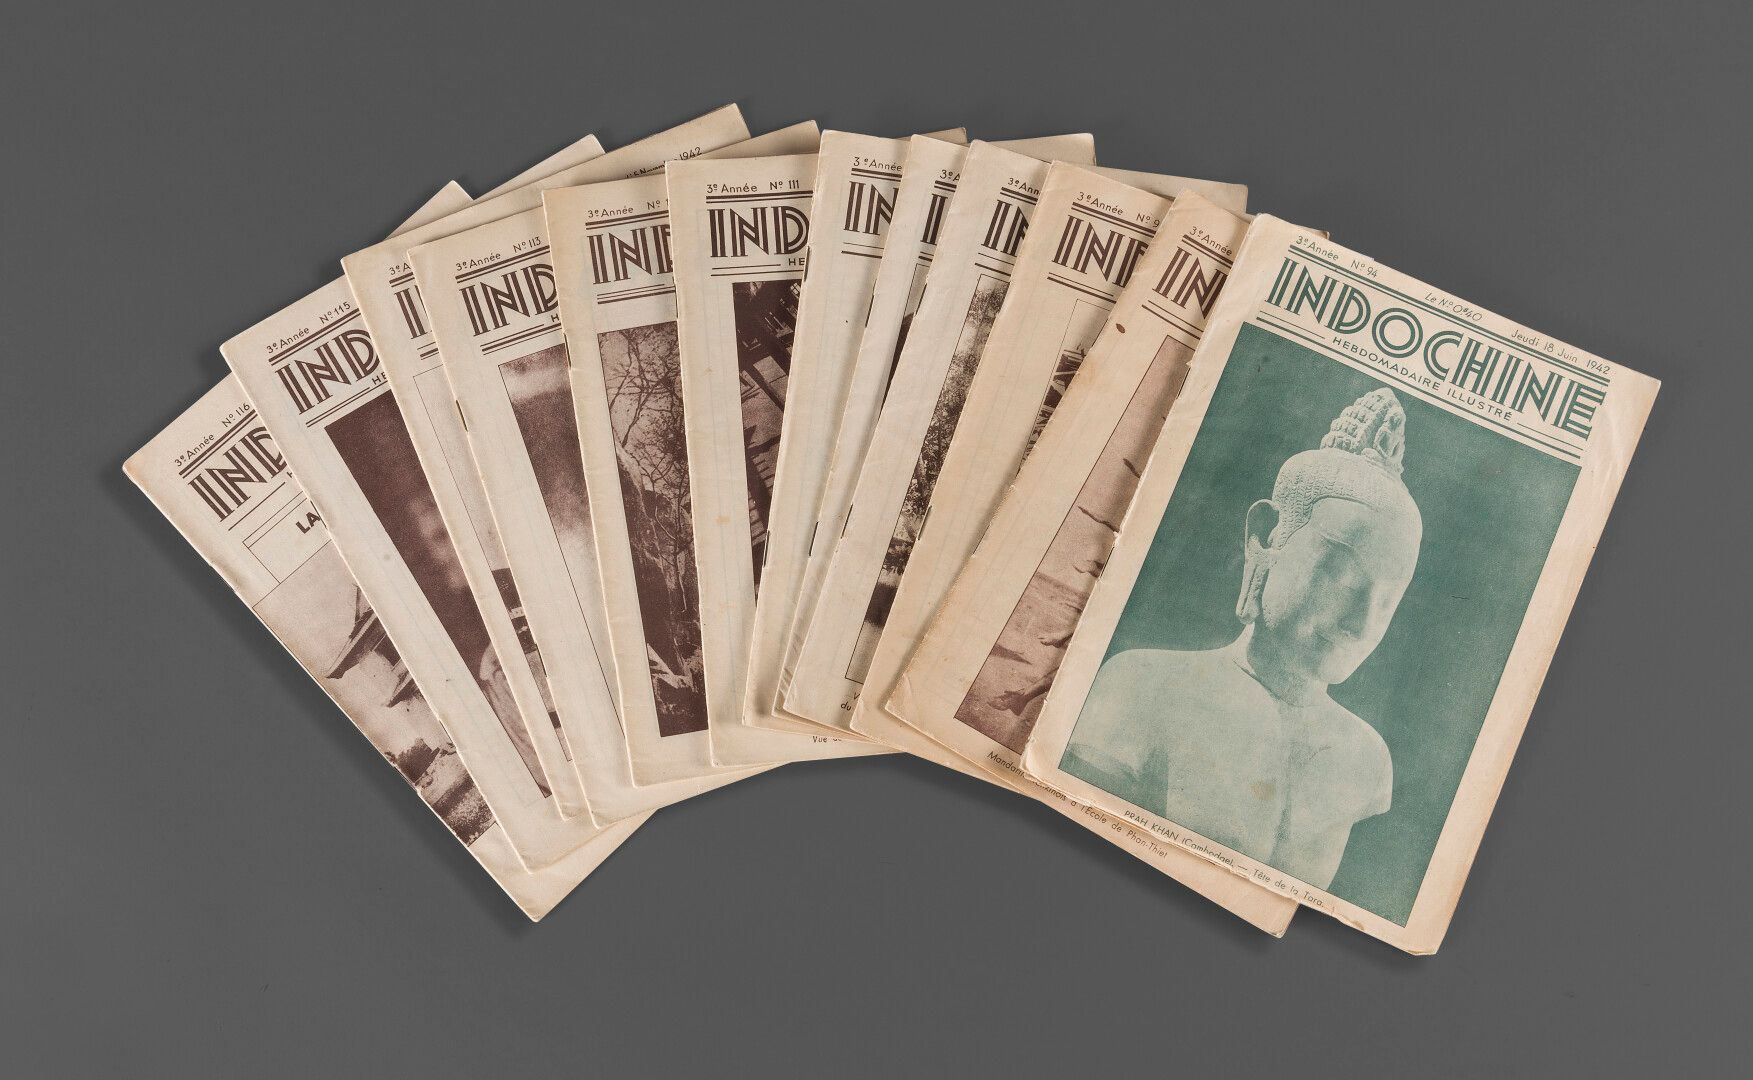 Null 1942

Indochine，每周的插图杂志，一套12本杂志，从1942年开始。

印度支那社会的所有政治和文化新闻。

- N°94 - 1942&hellip;